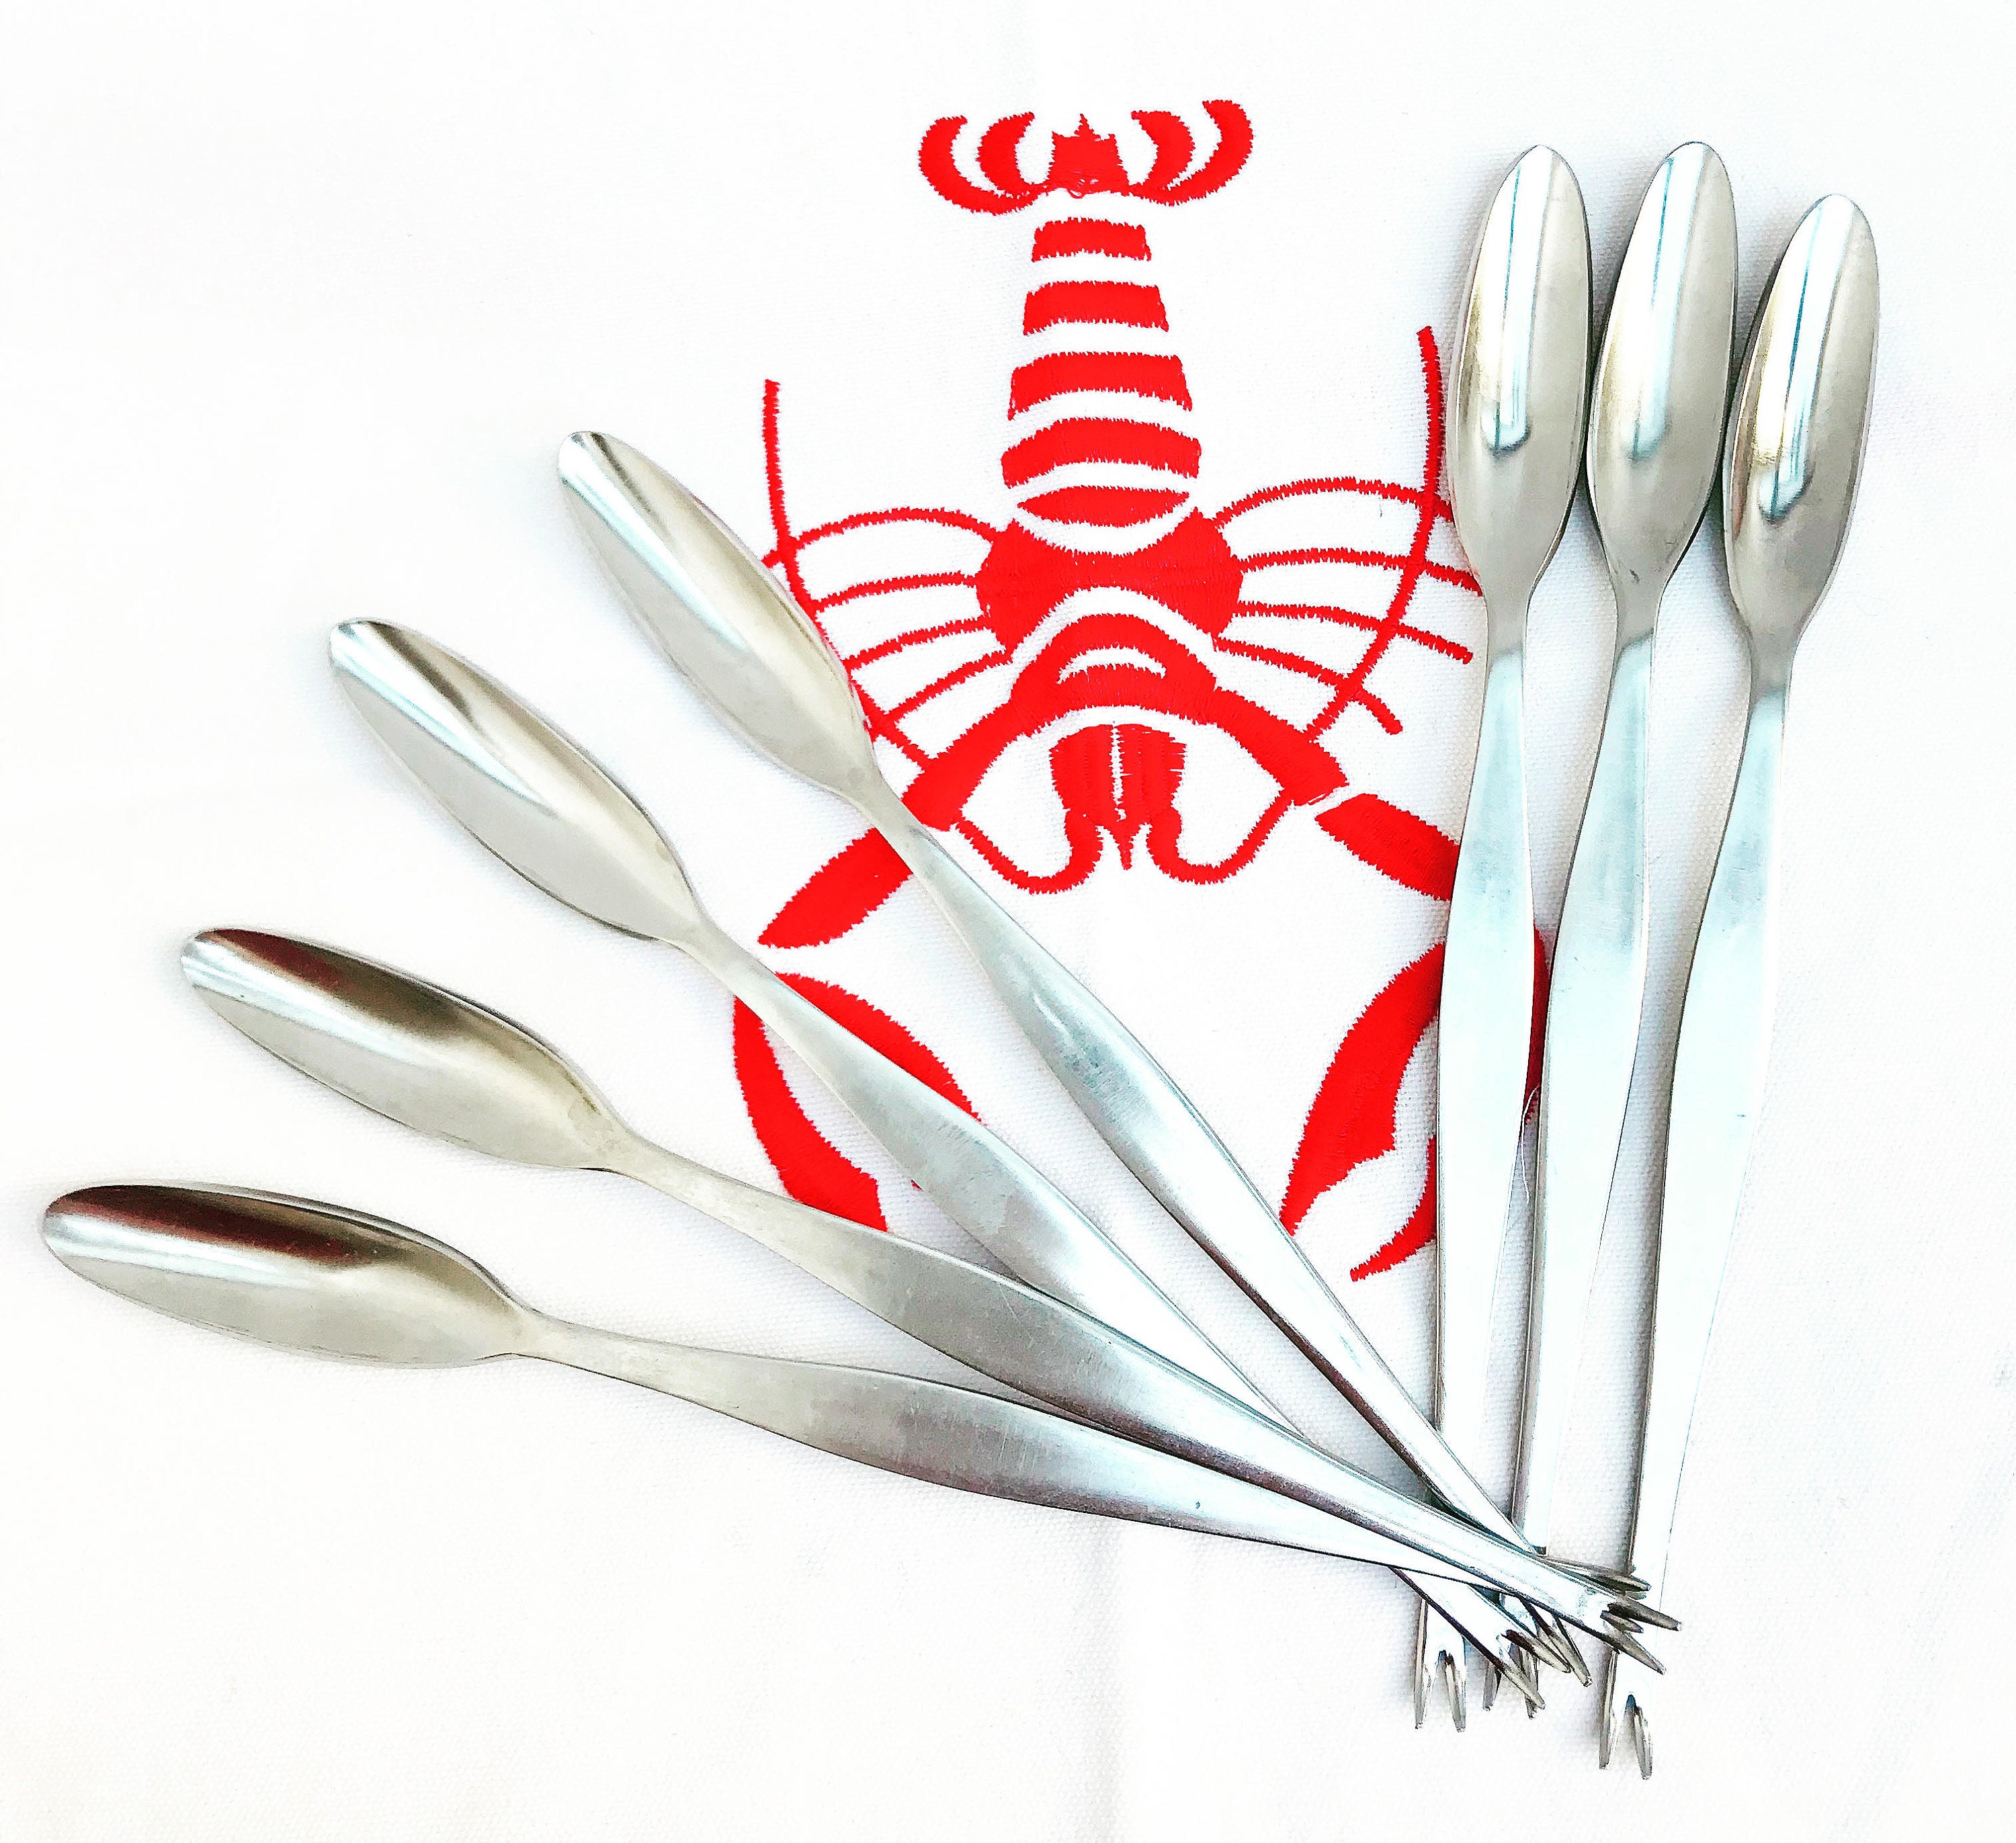 7 Lobster Fork Set Vintage Seafood Picks Forks Cutlery Stainless Steel Set Food Photo Prop Elegant Dinner Wedding Gift Seafood Crab Spoon